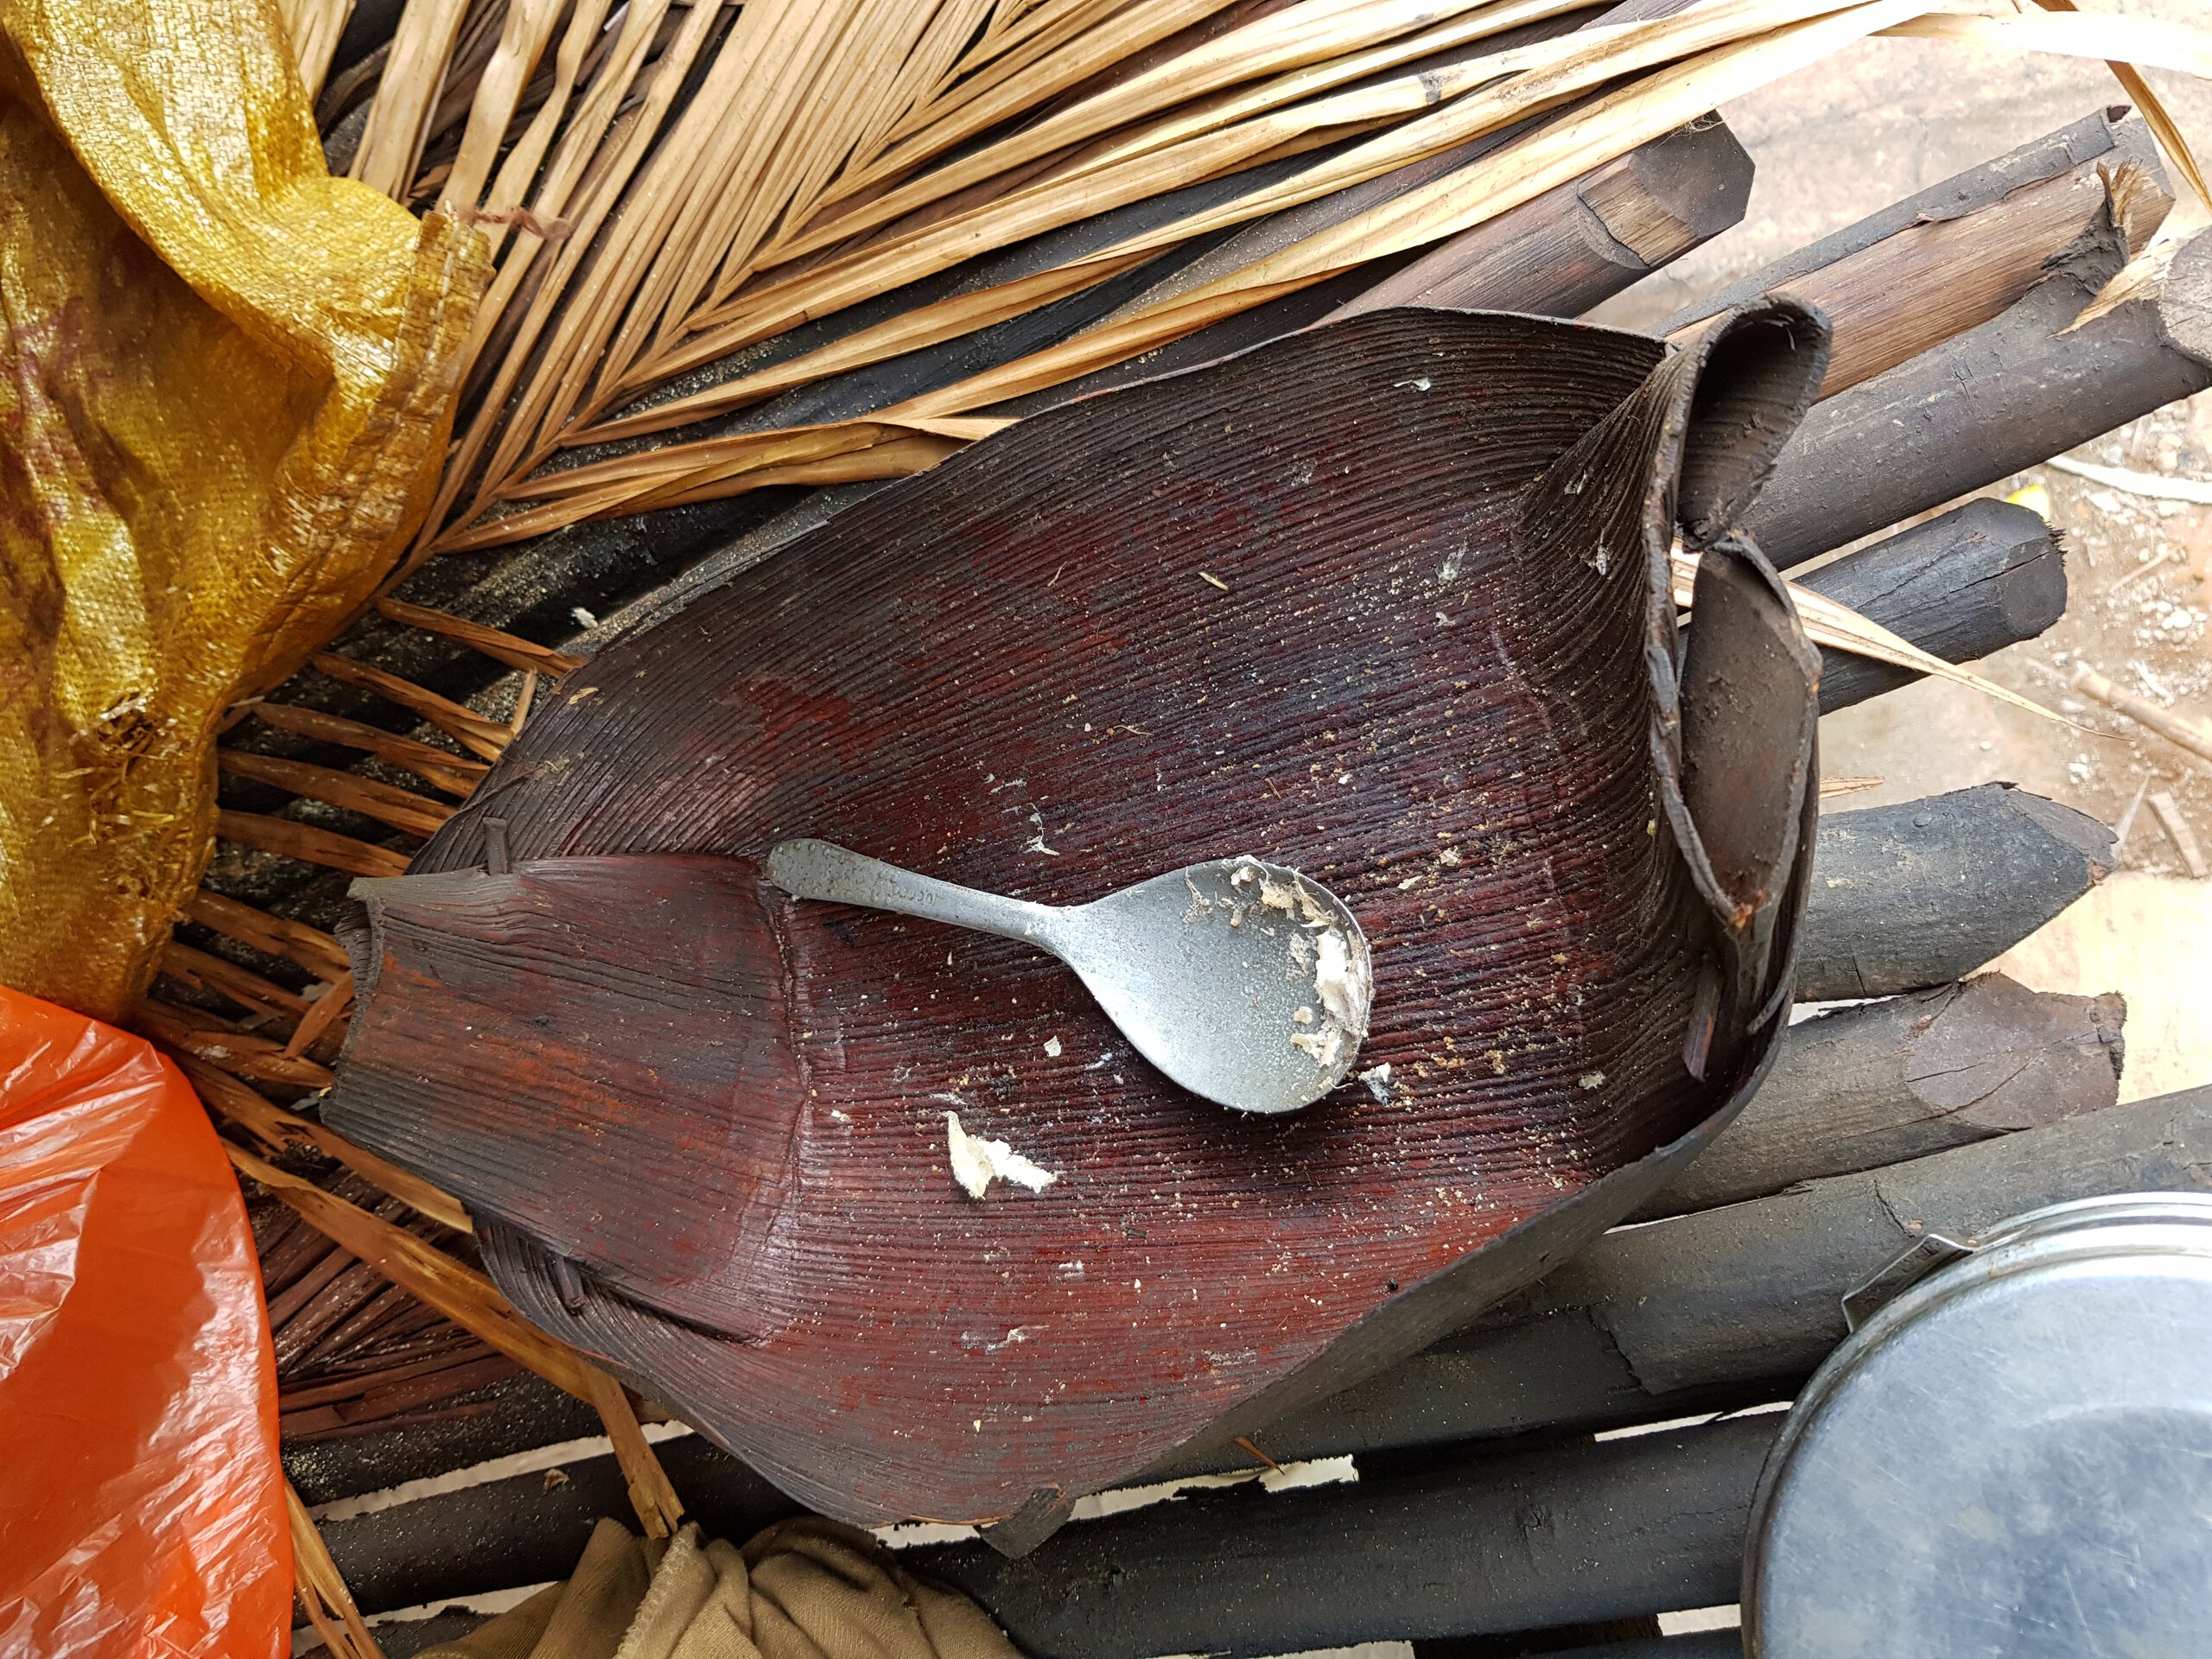 A traditional Togutil bowl made of a single palm leaf.